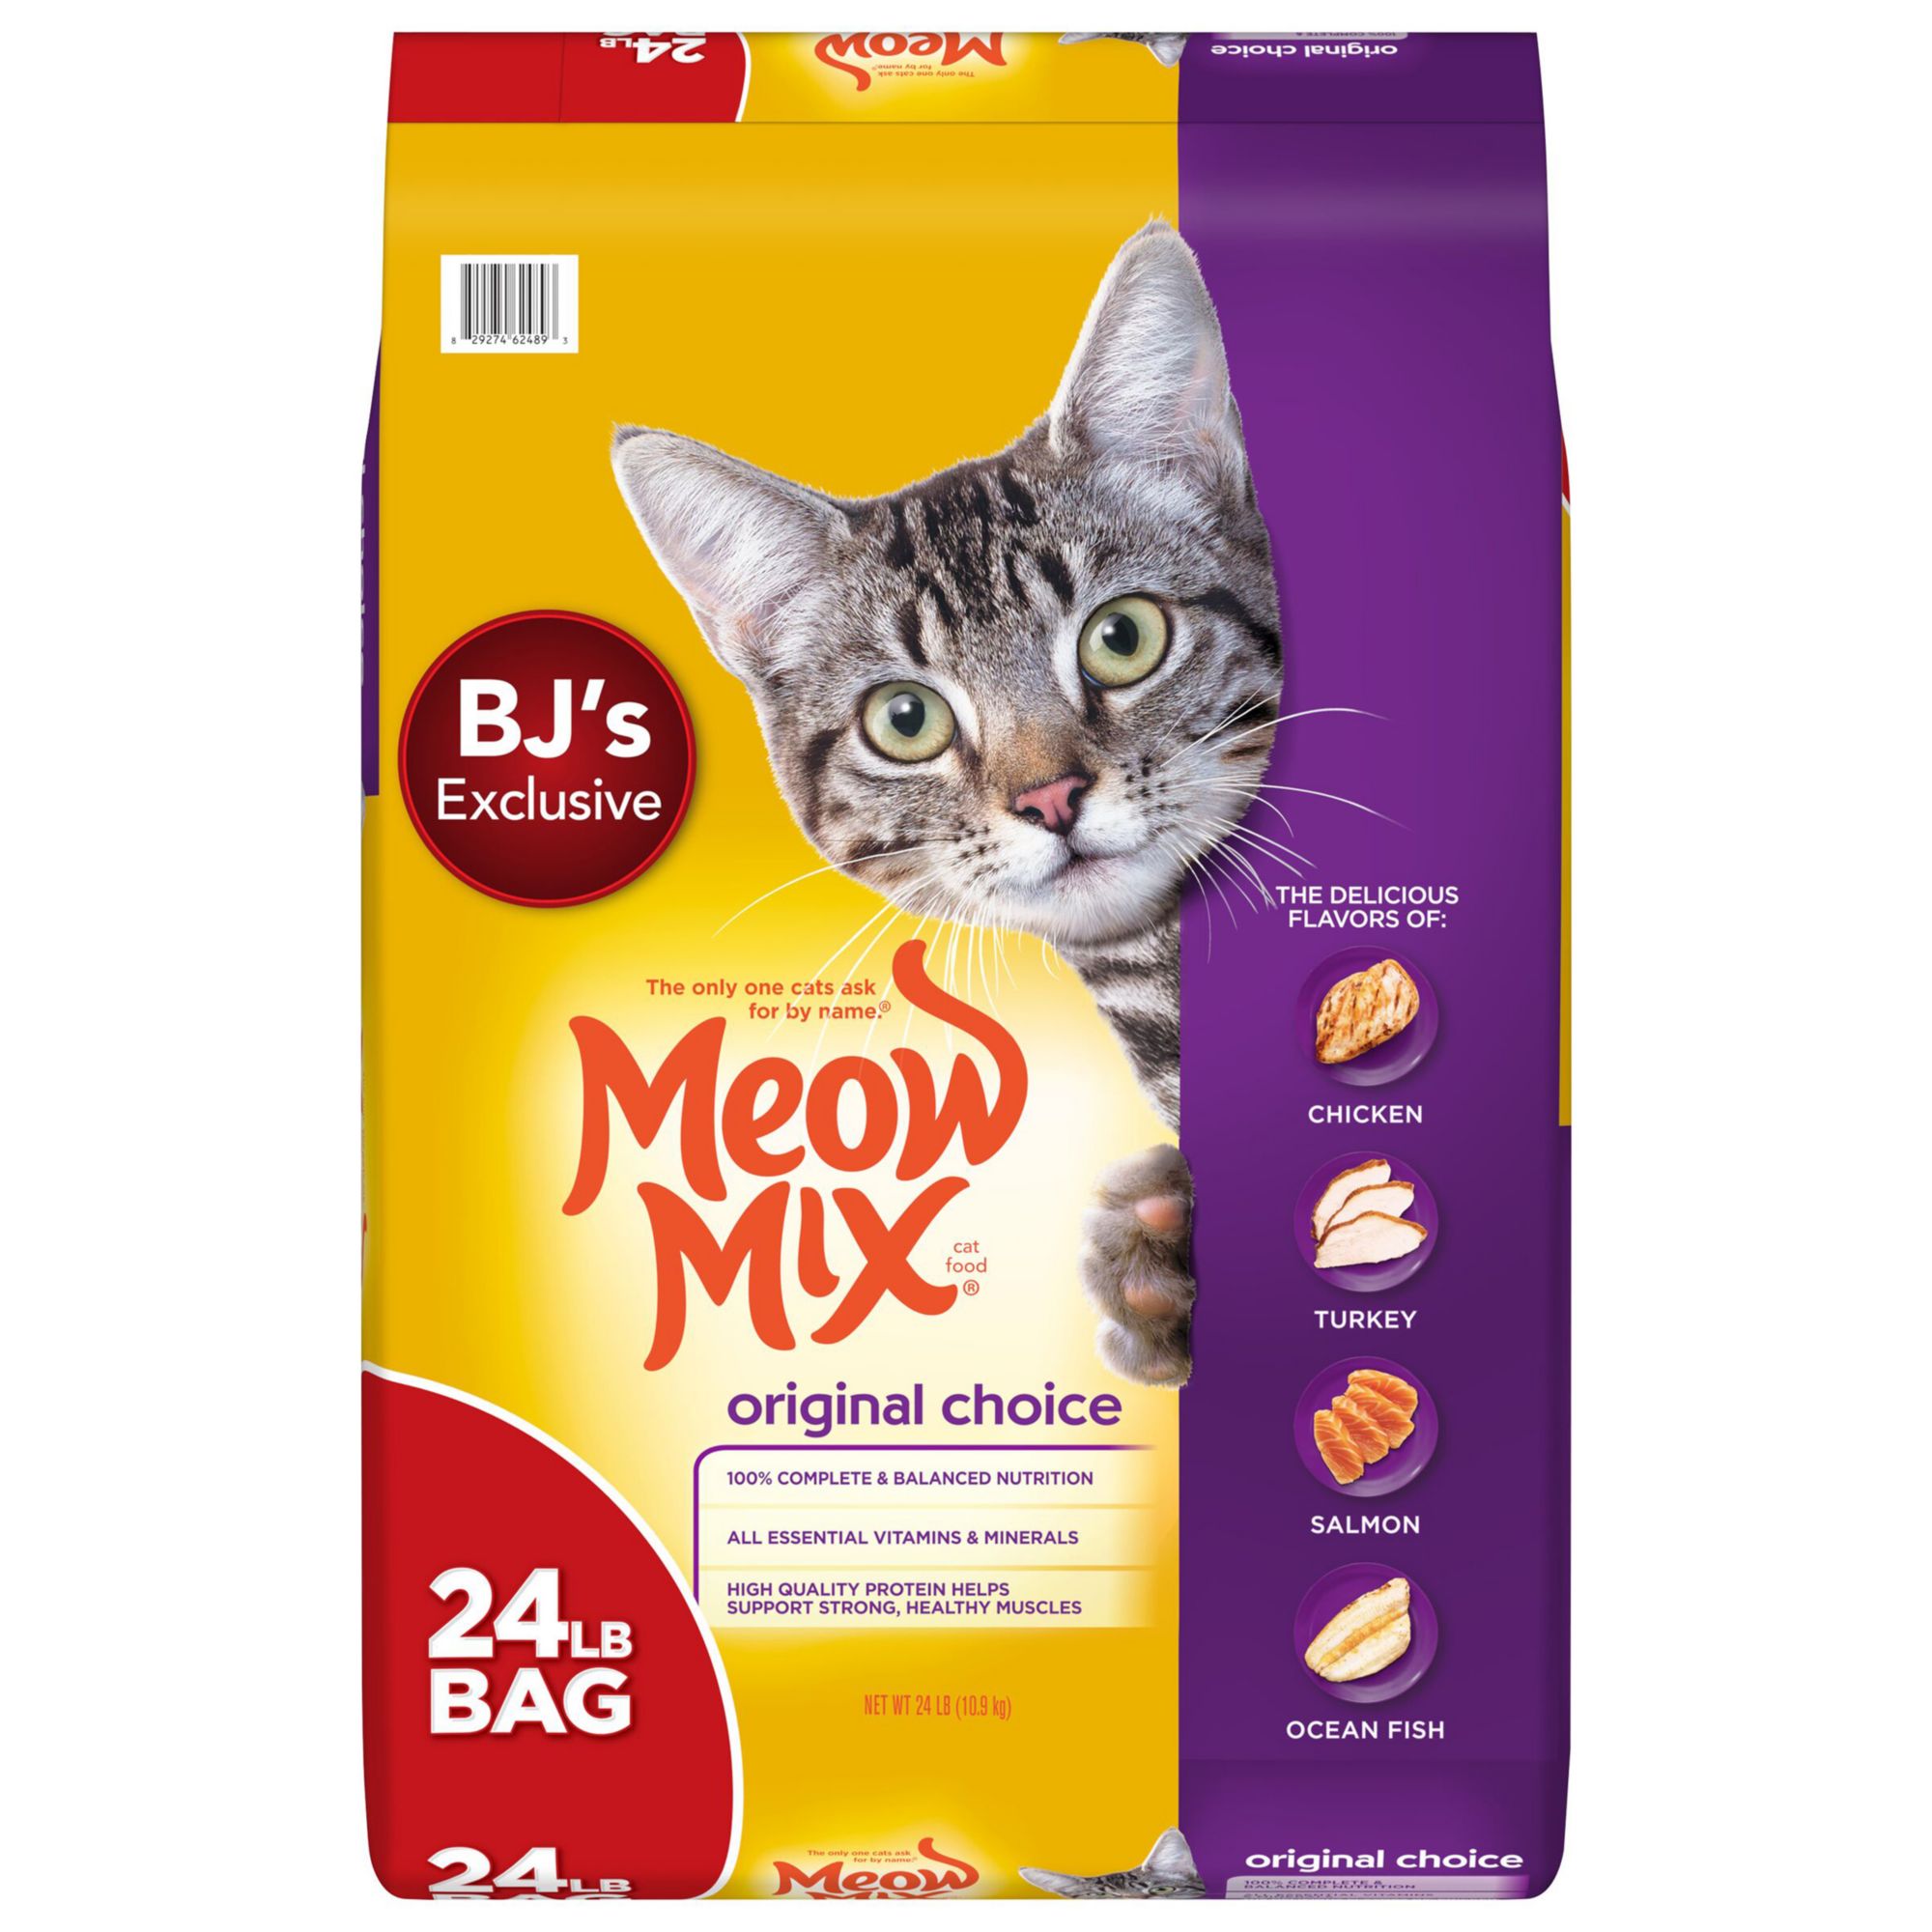 9Lives Daily Essentials Dry Cat Food, 20-Pound Bag 